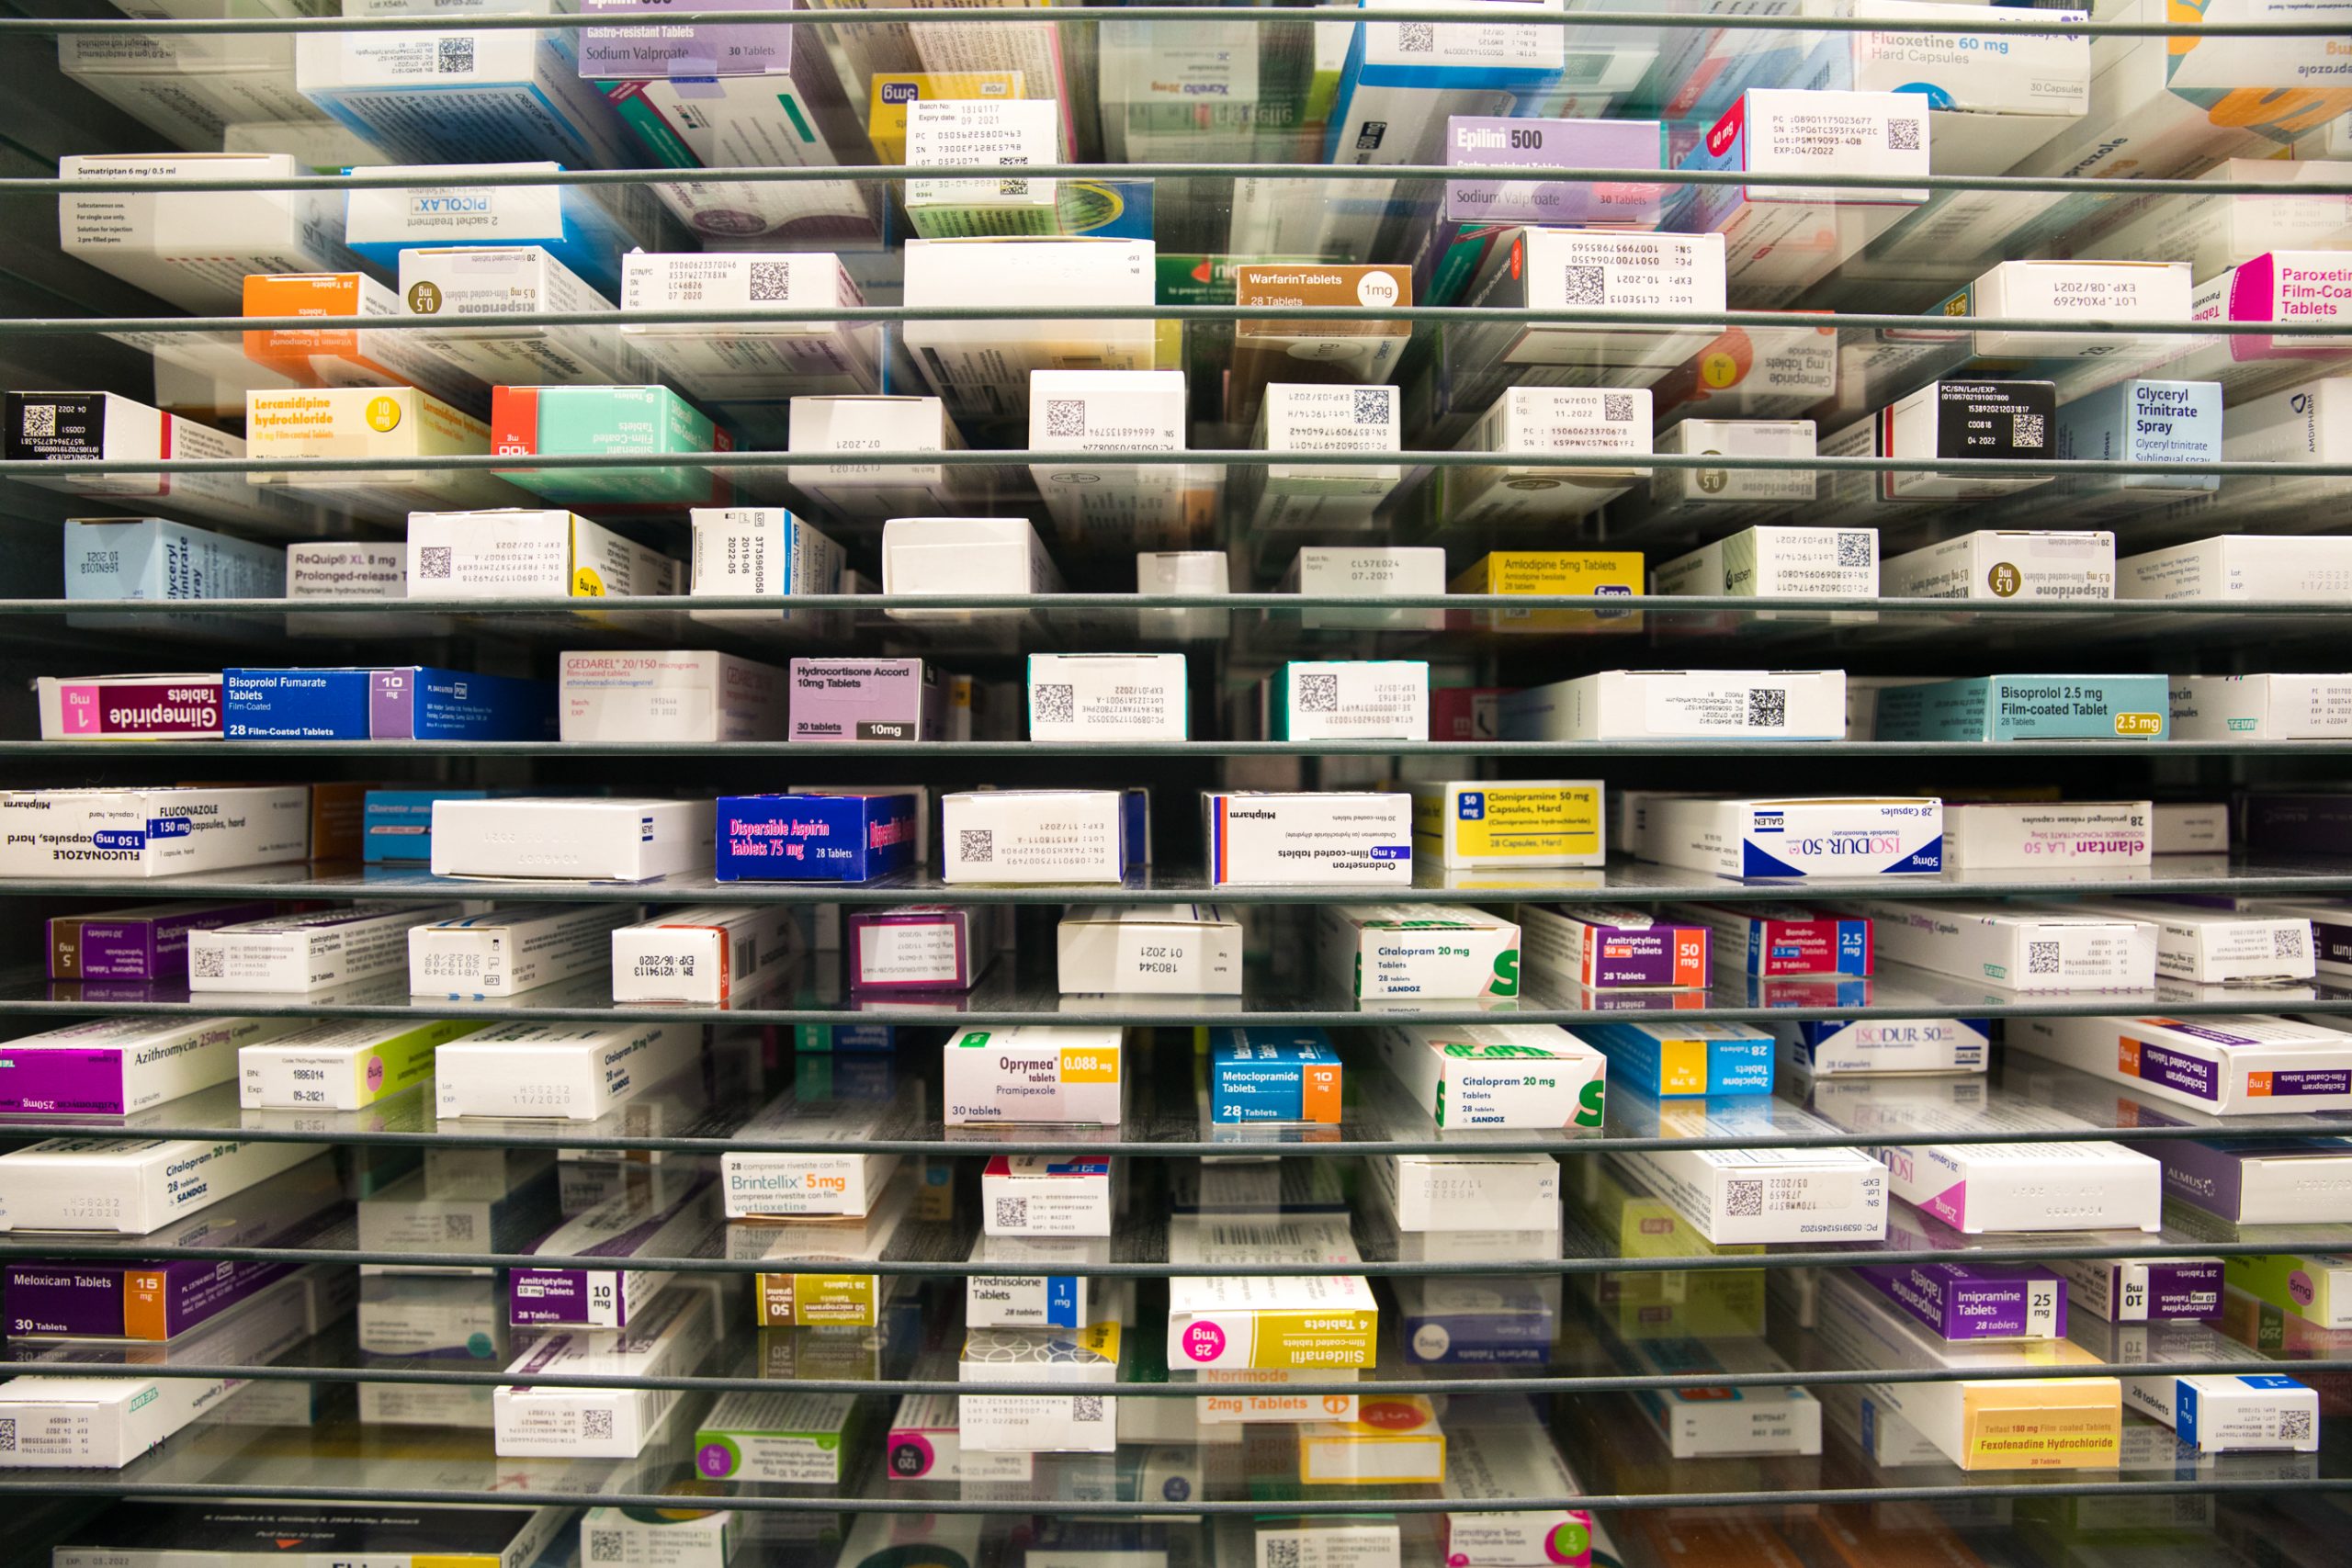 Community pharmacy issue critical drug supply warning